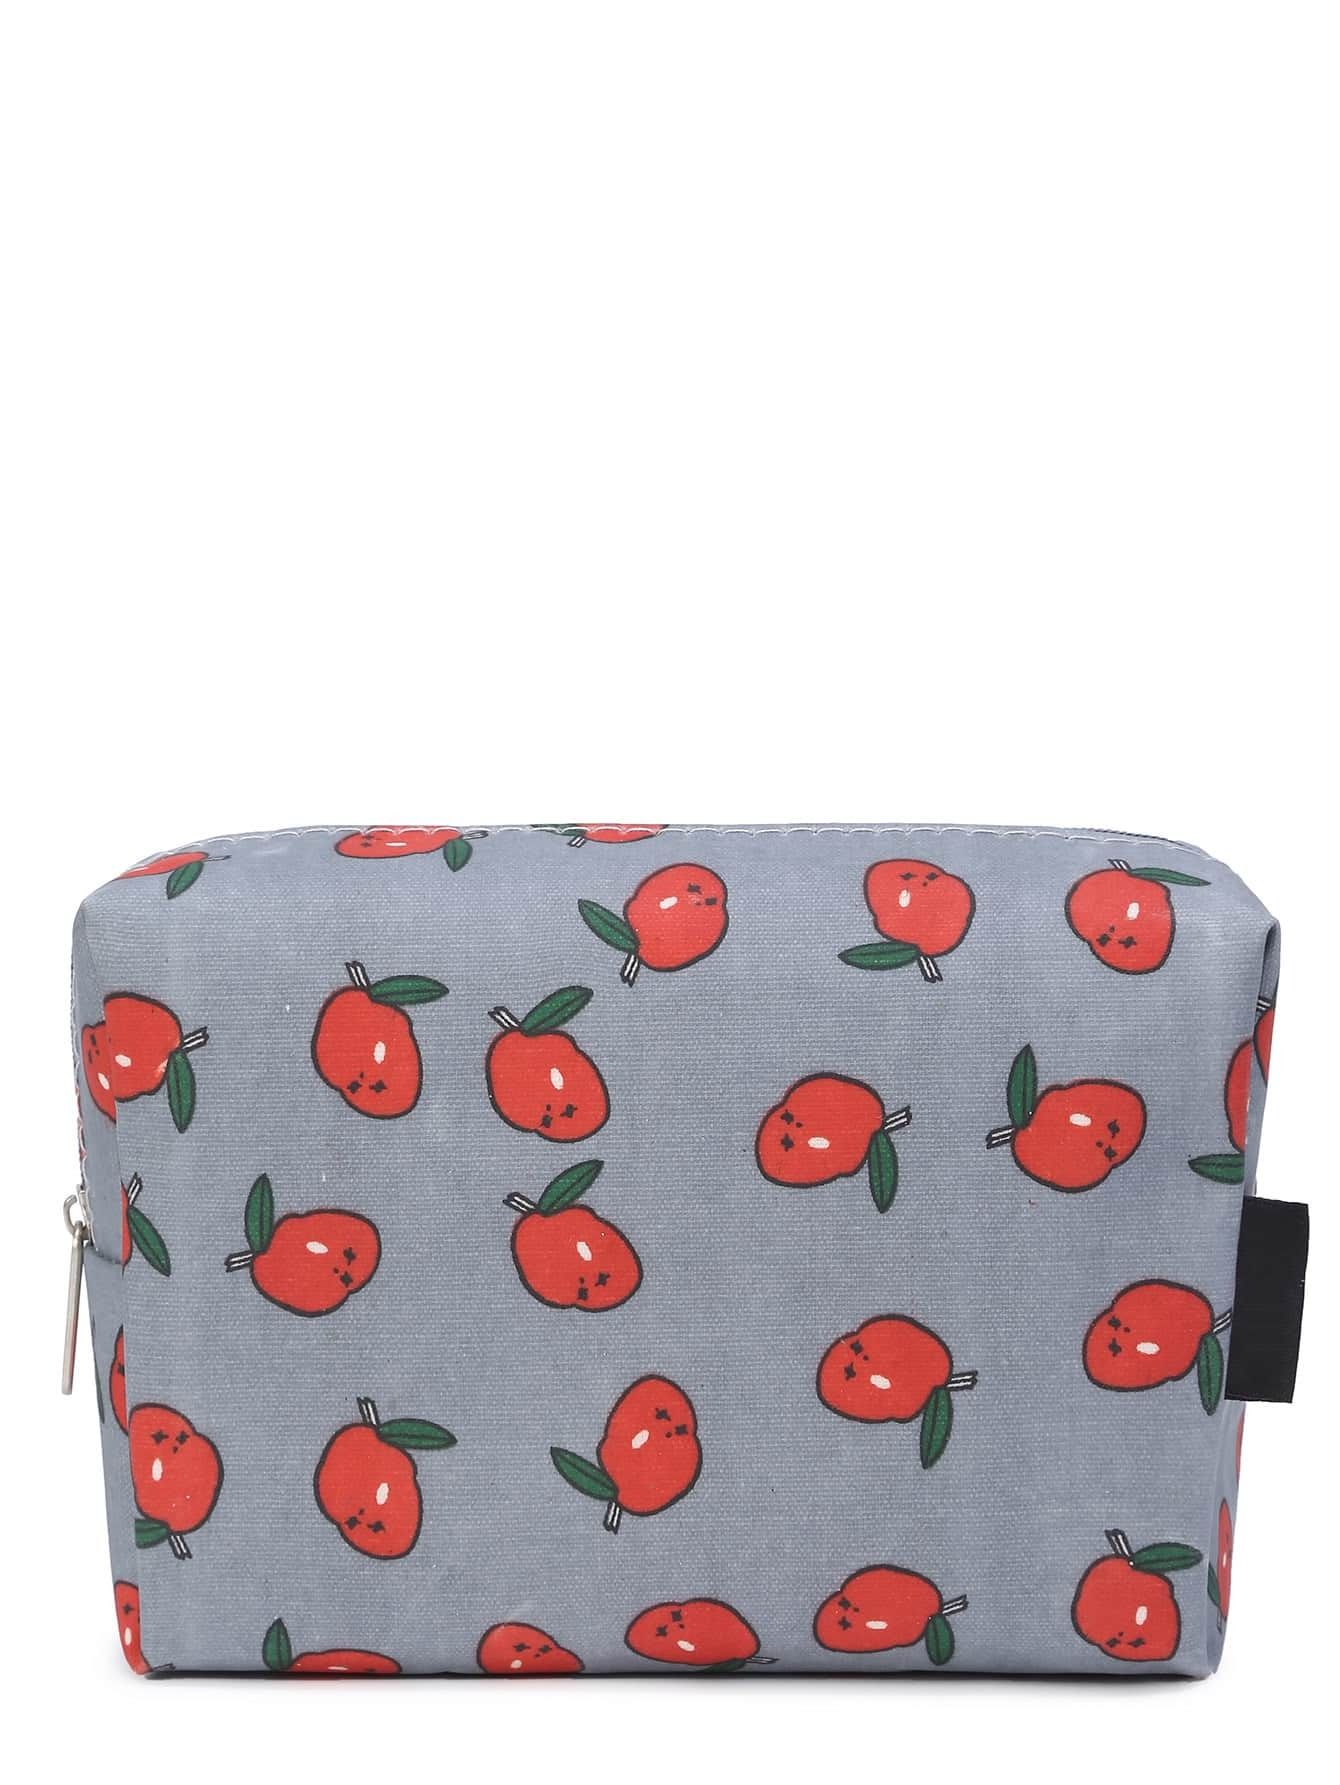 Fruits Print Zipper Up Cosmetic Bag | SHEIN